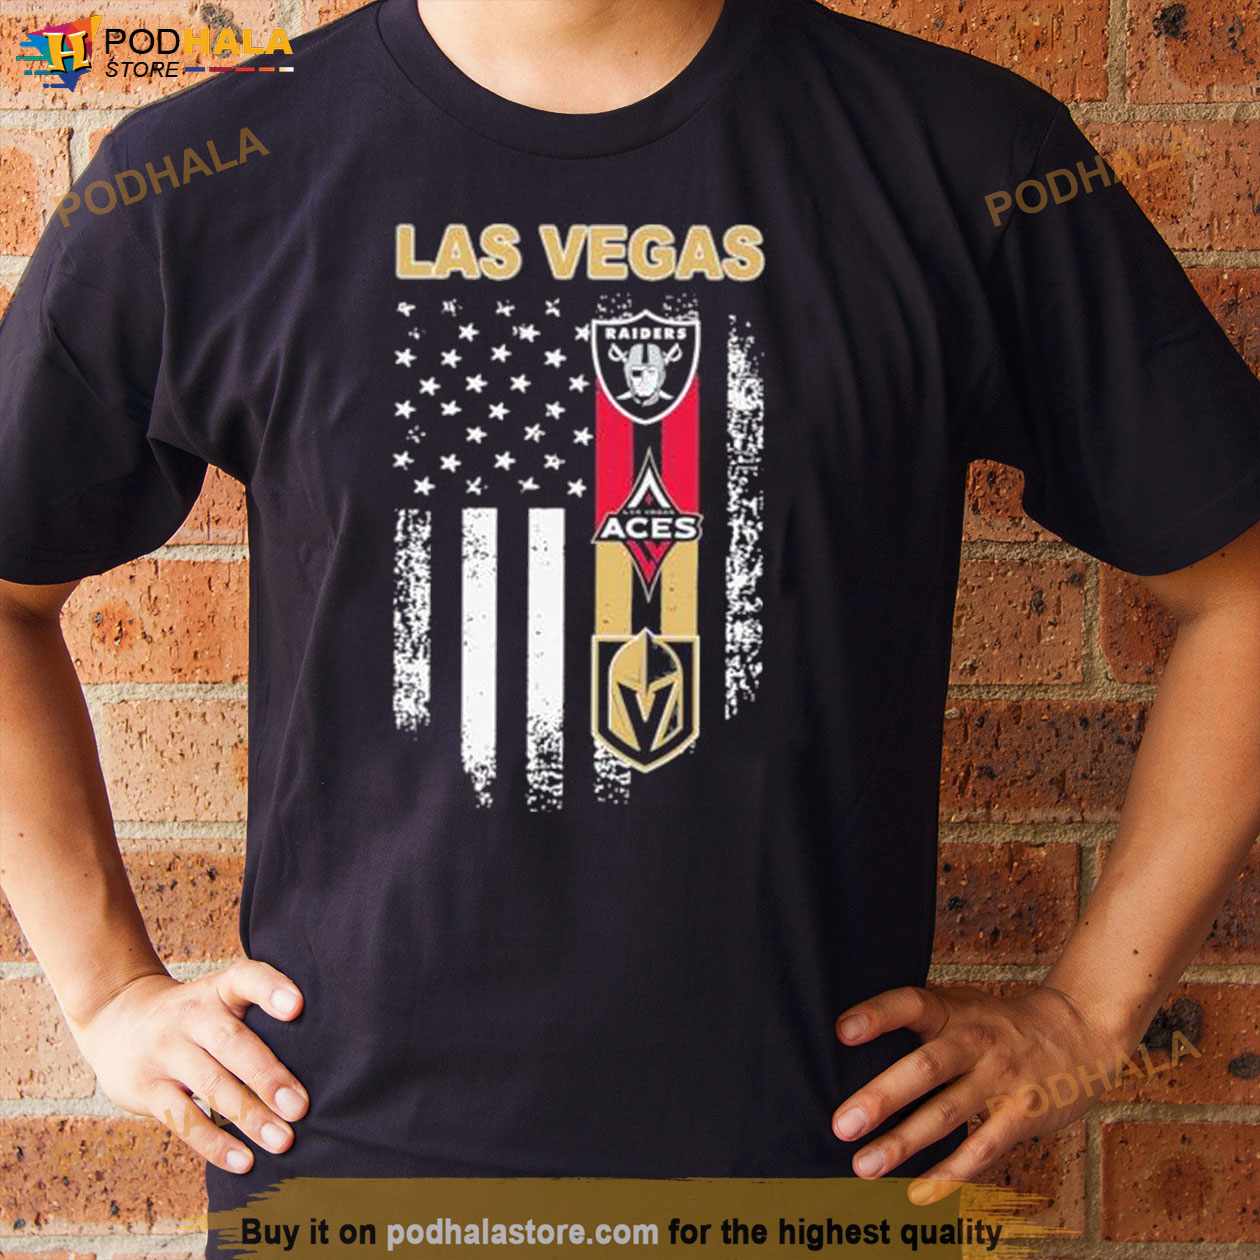 Golden Knights Raiders Las Vegas T-Shirt Black 18 Months